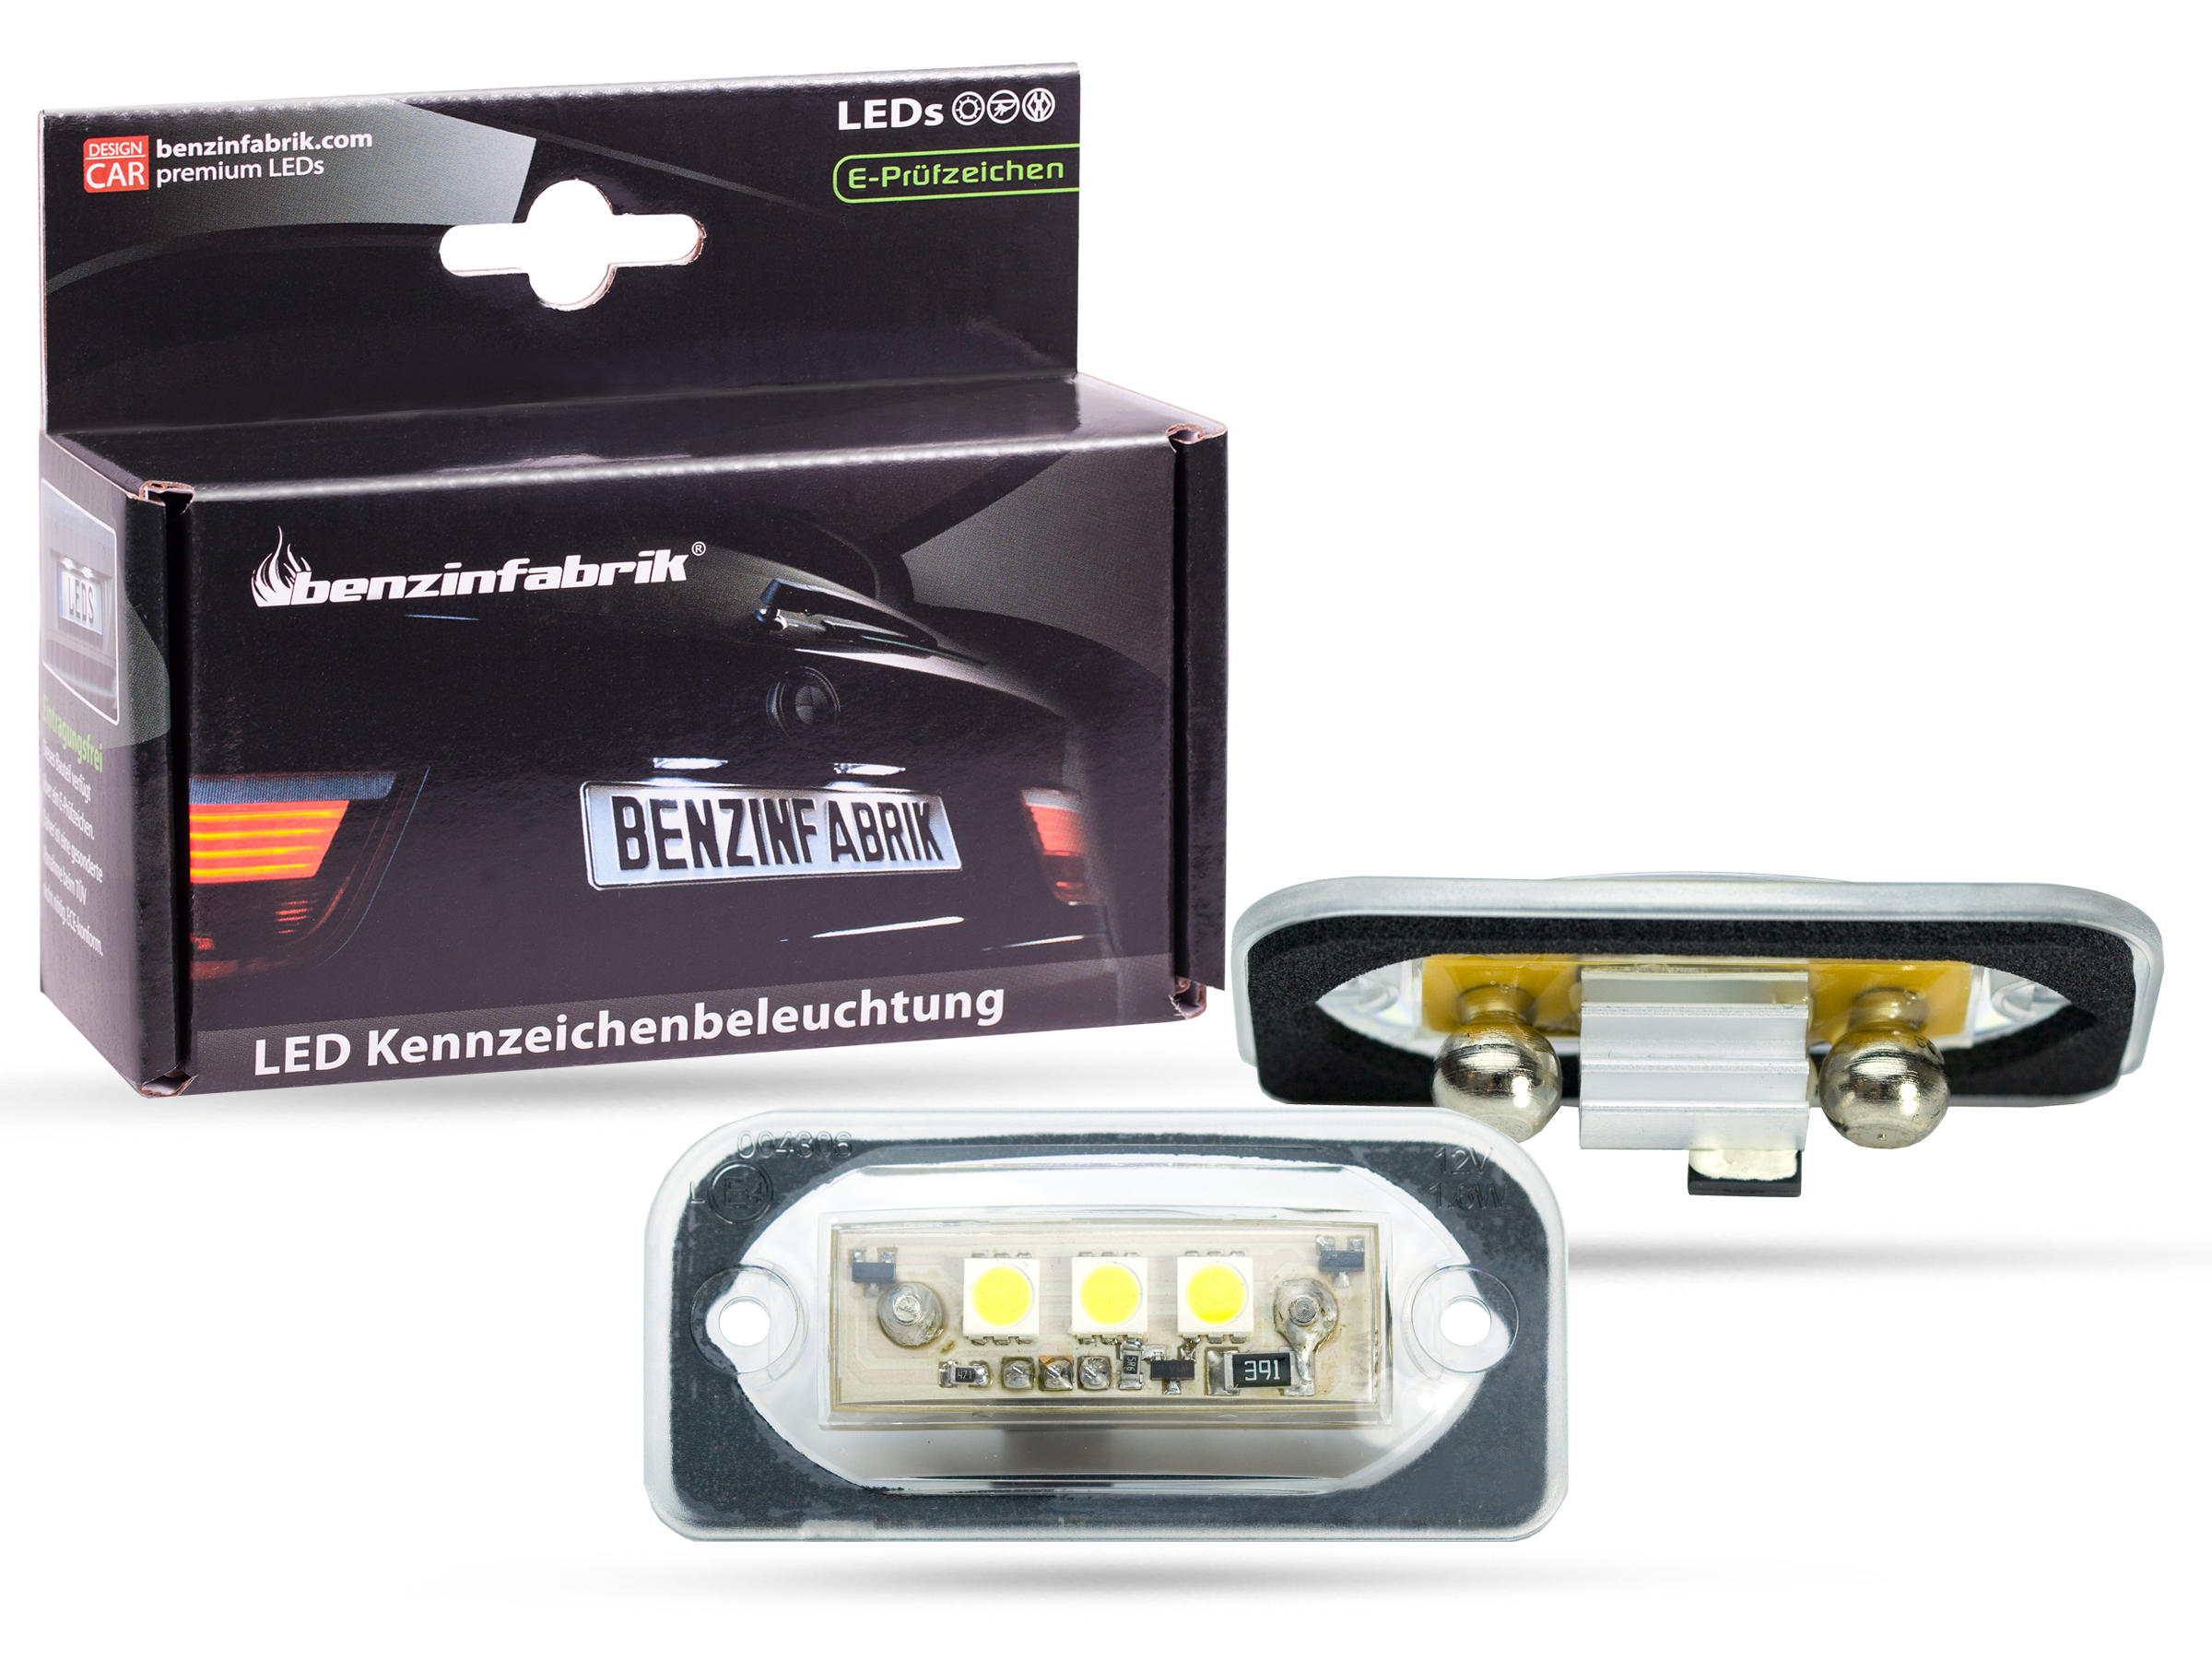 LED Kennzeichenbeleuchtung Module Mercedes C-Klasse W203 Limo Bj. 00-07,  mit E-Prüfzeichen, LED Kennzeichenbeleuchtung für Mercedes, LED  Kennzeichenbeleuchtung